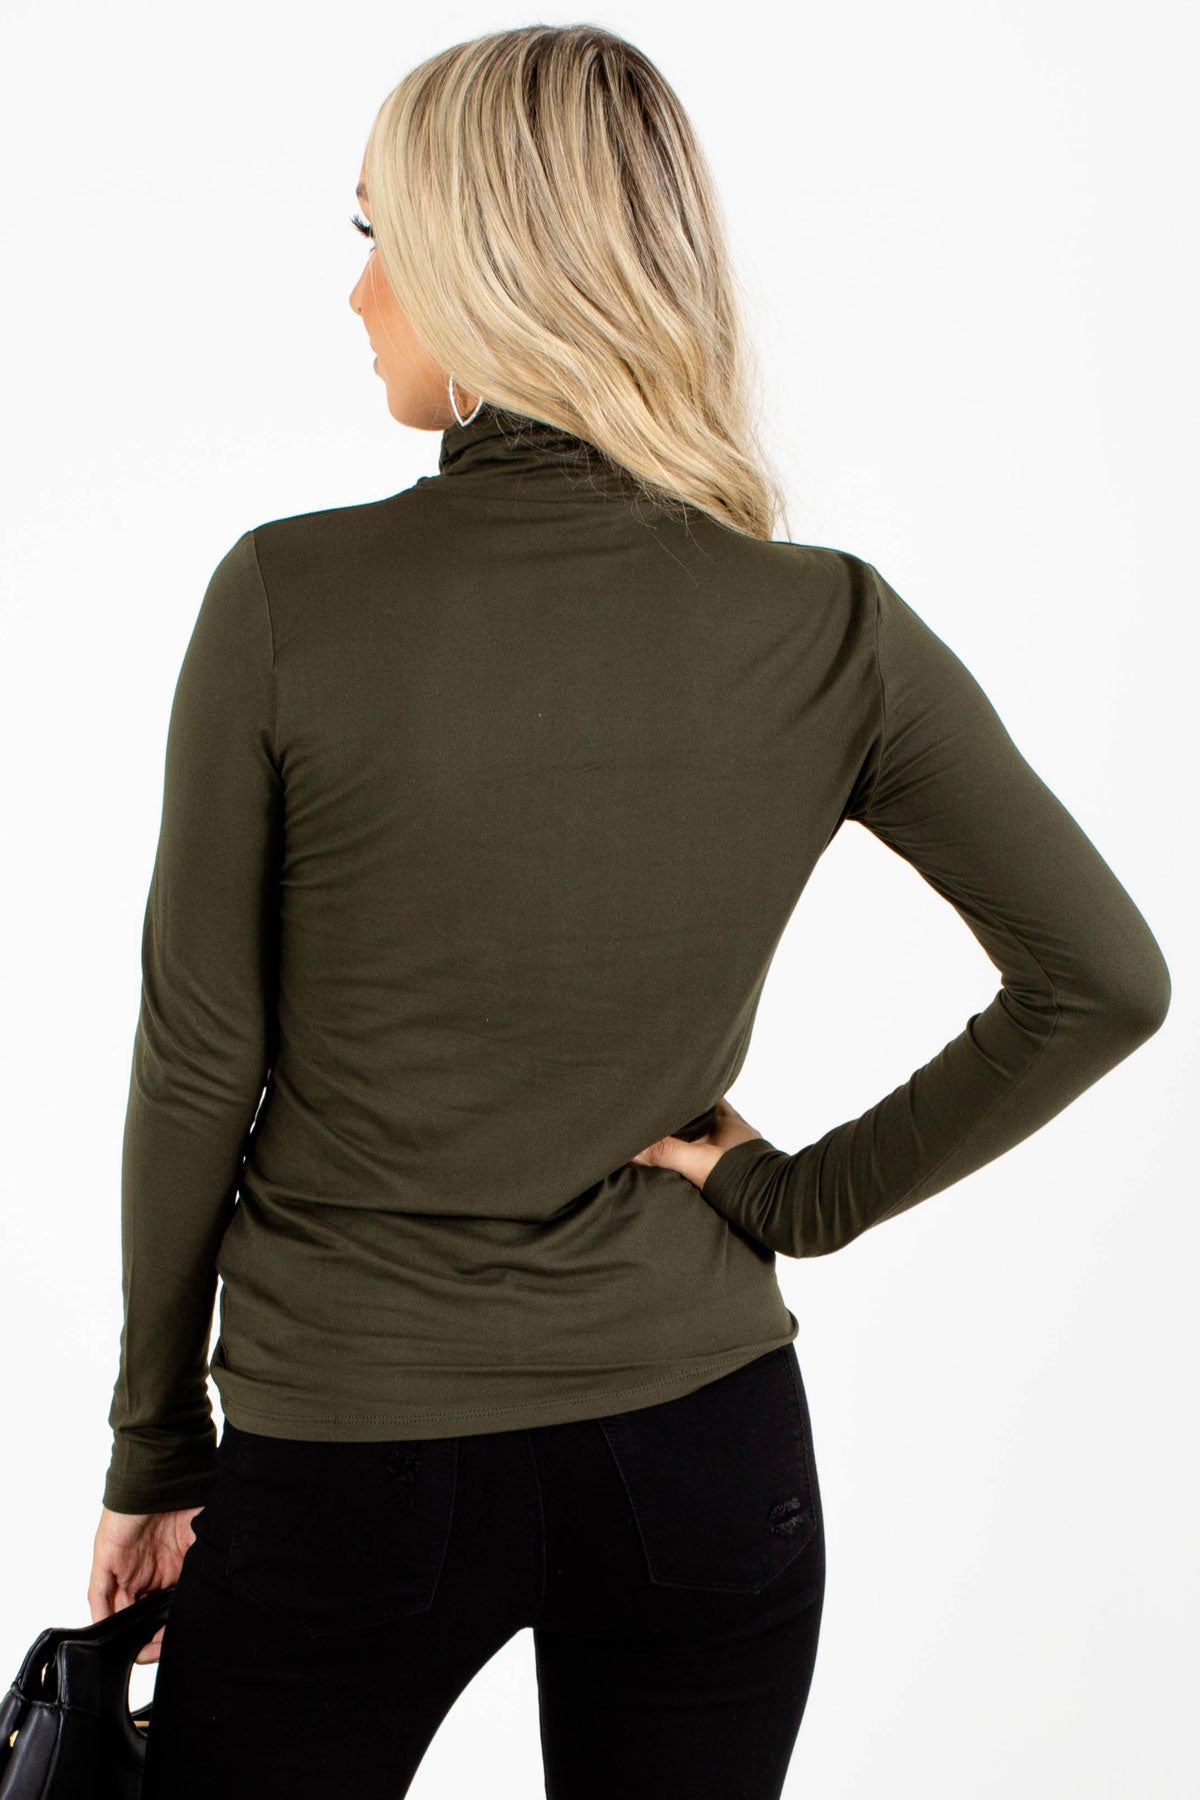 Basic Long Sleeve Turtleneck Top for Women in Olive Green